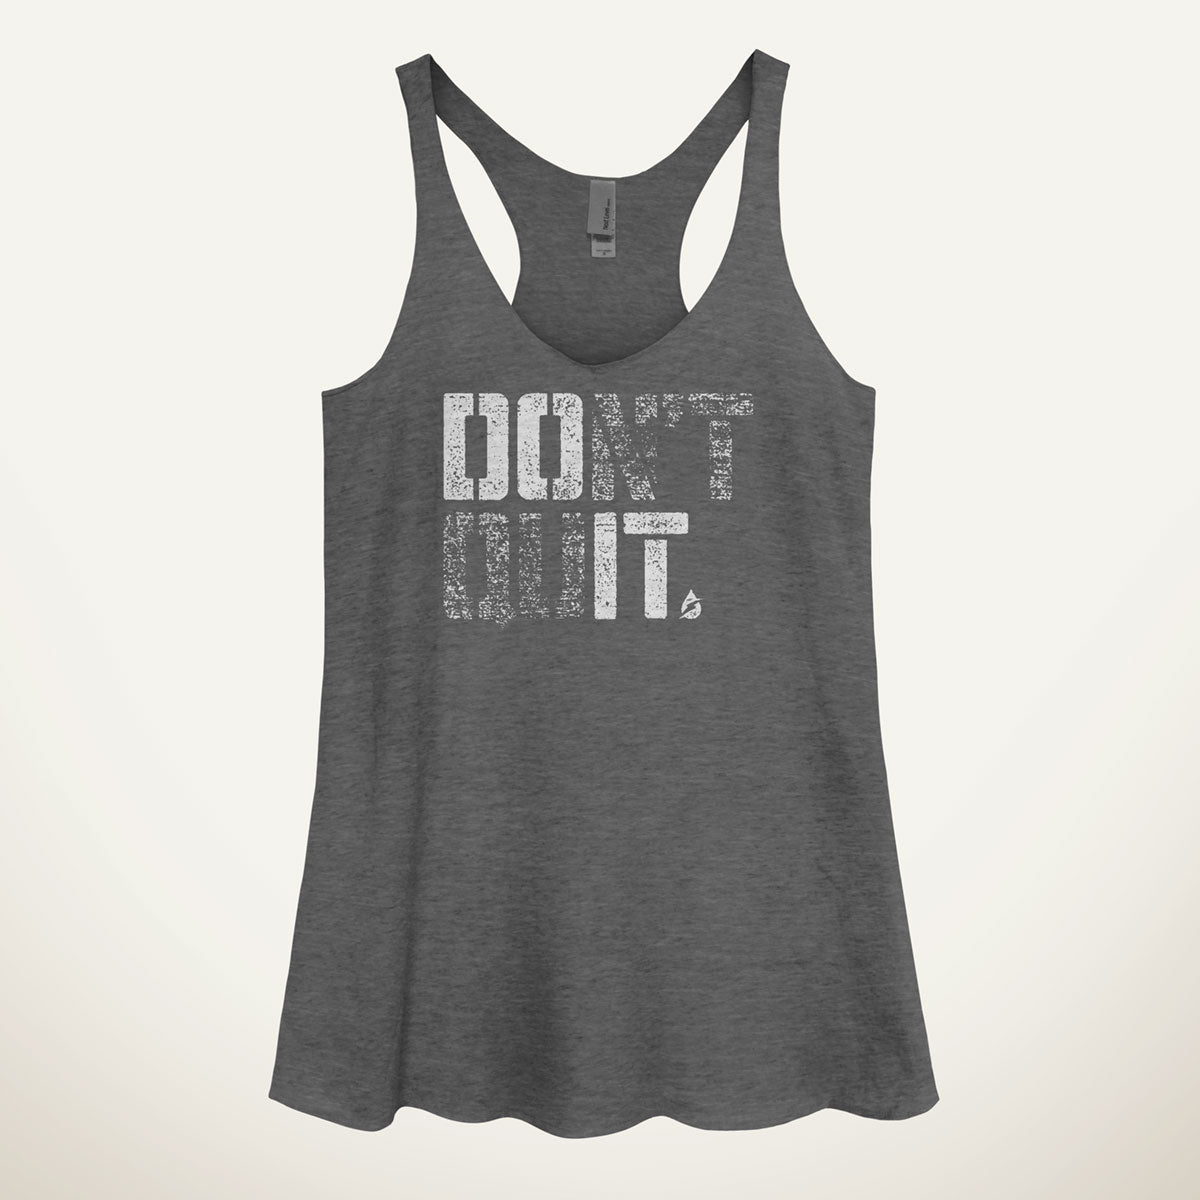 Don't Quit/Do It Women's Tank Top